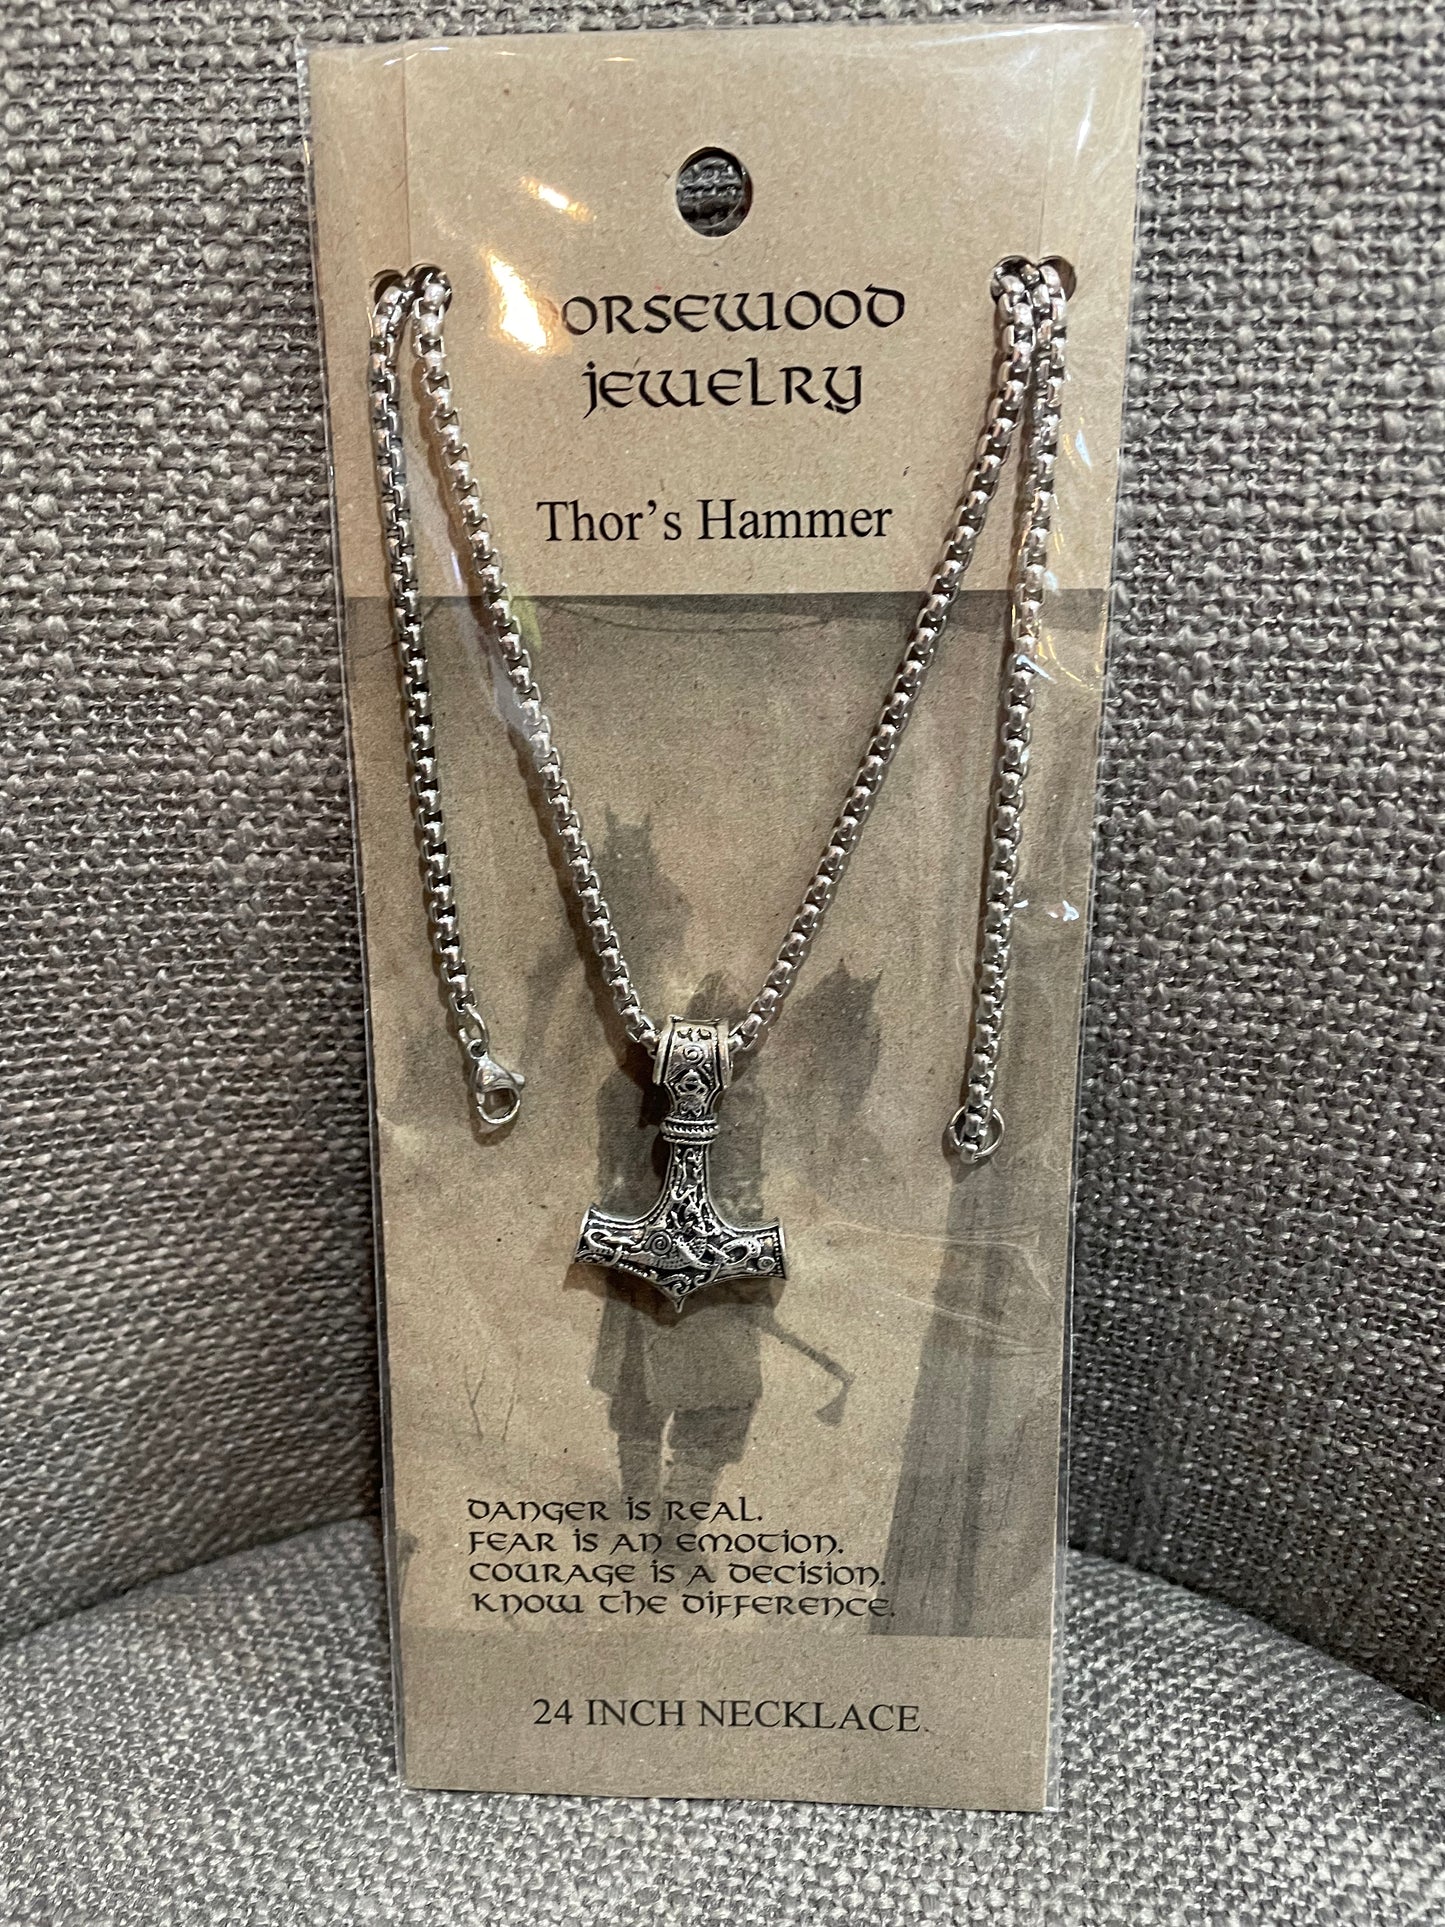 Thor's Hammer W/ Heavy Chain $35